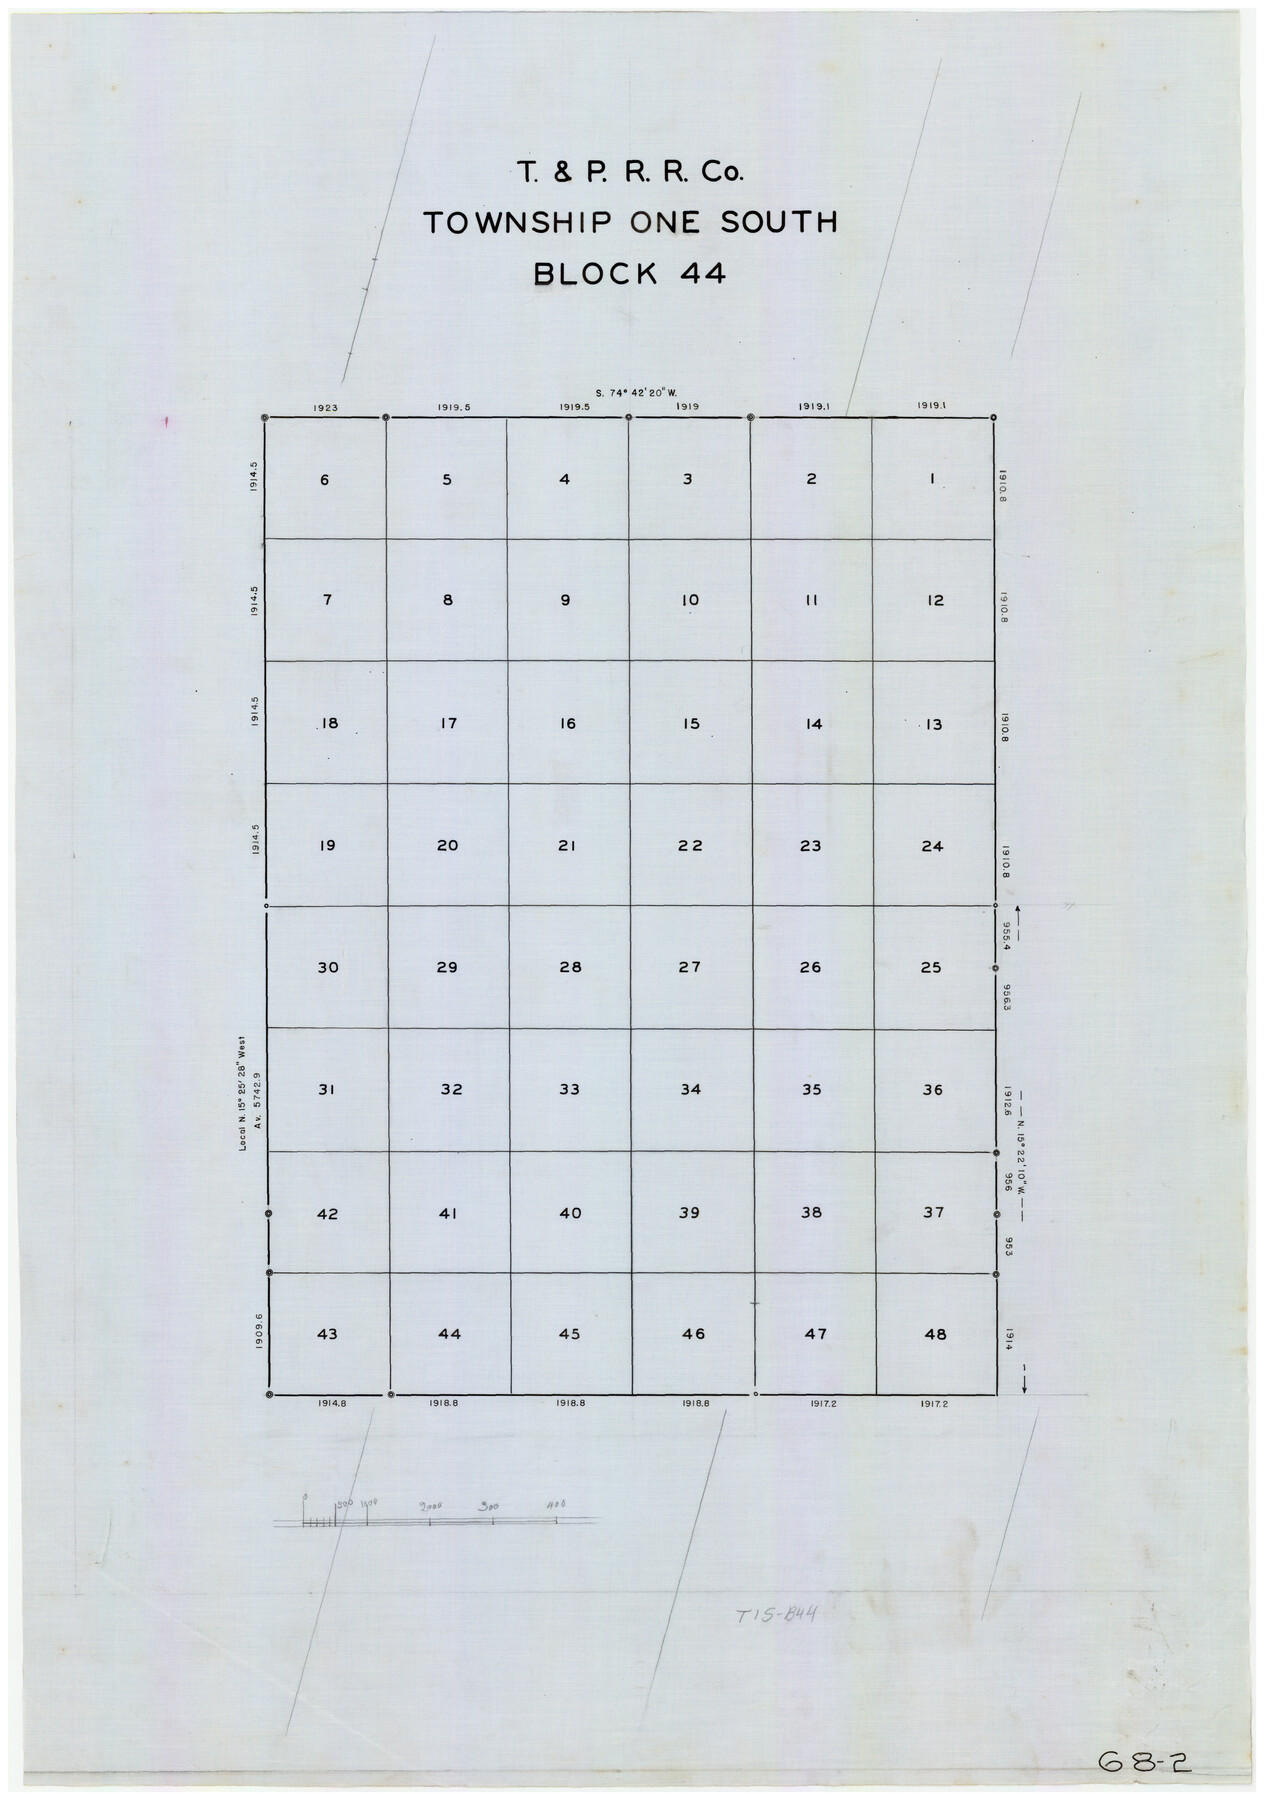 90901, T. & P. RR. Co. Township 1 South, Block 44, Twichell Survey Records